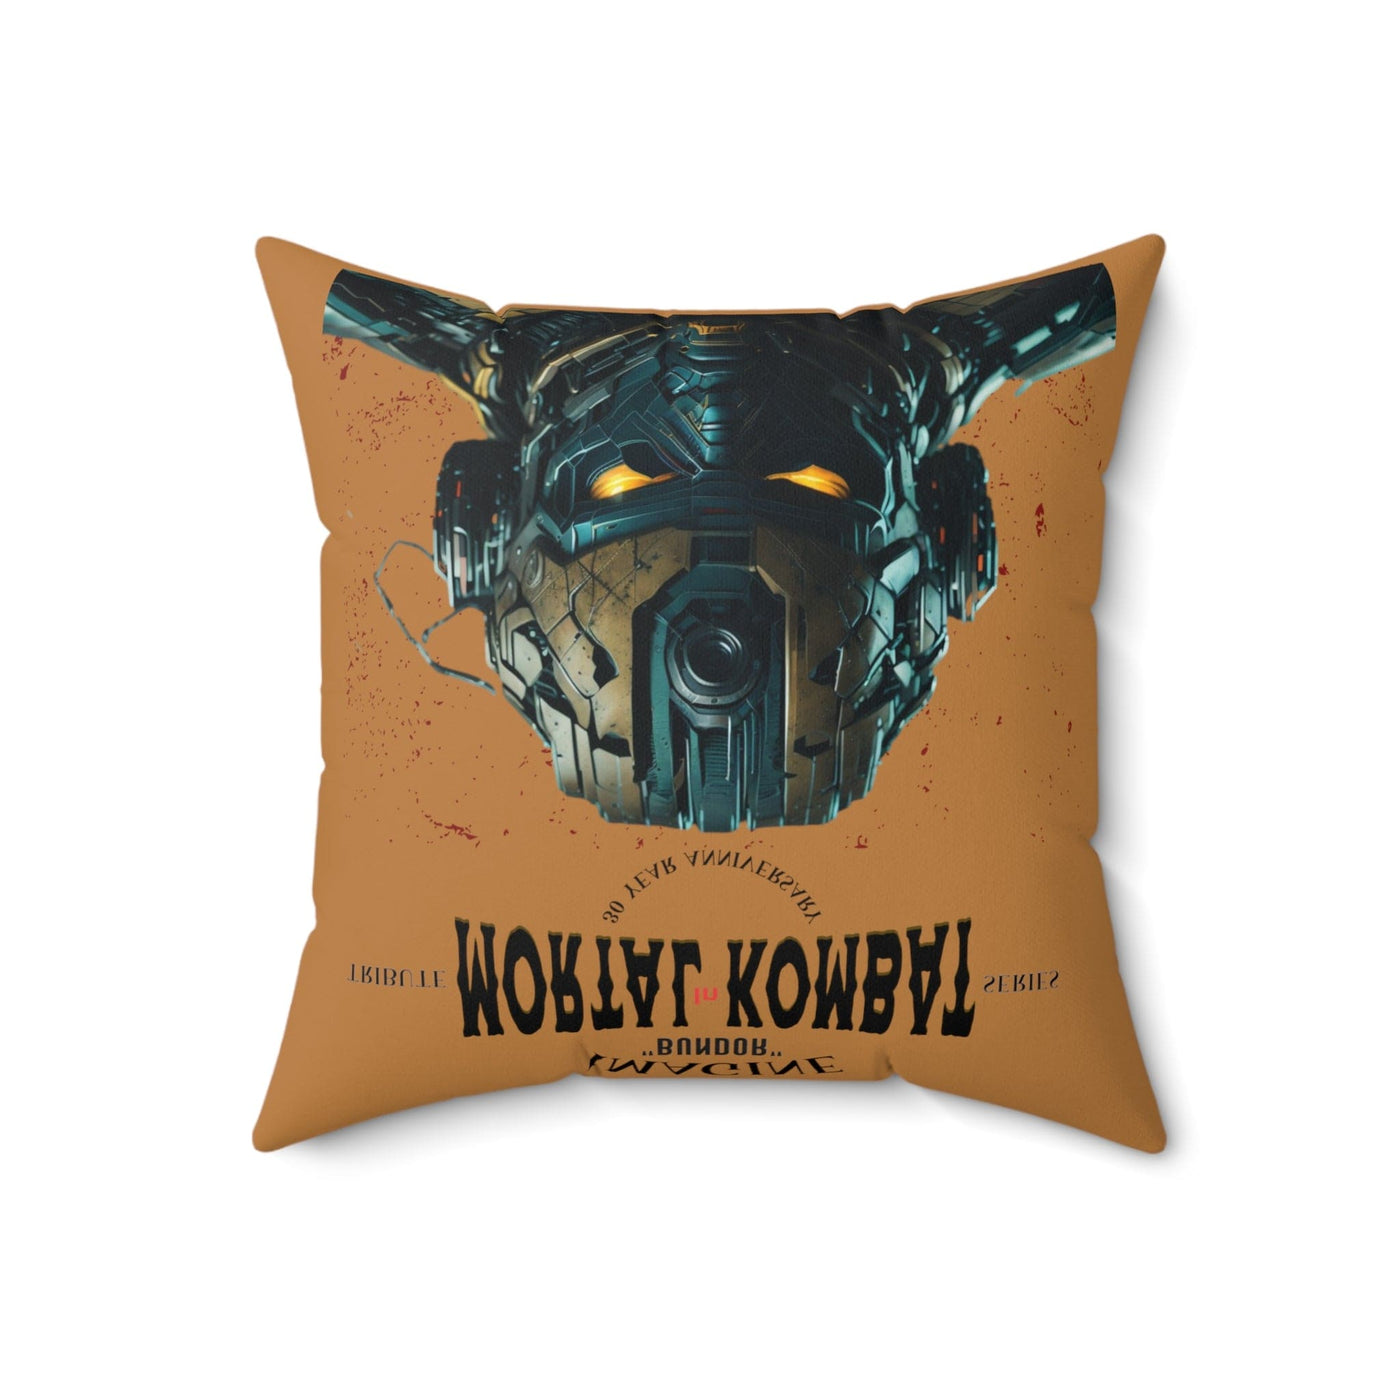 Gamer Fresh Imagine If Collection | Mortal Kombat 30 Year Anniversary Collection | Bundor Time-Warp | Tan Brown Square Pillow